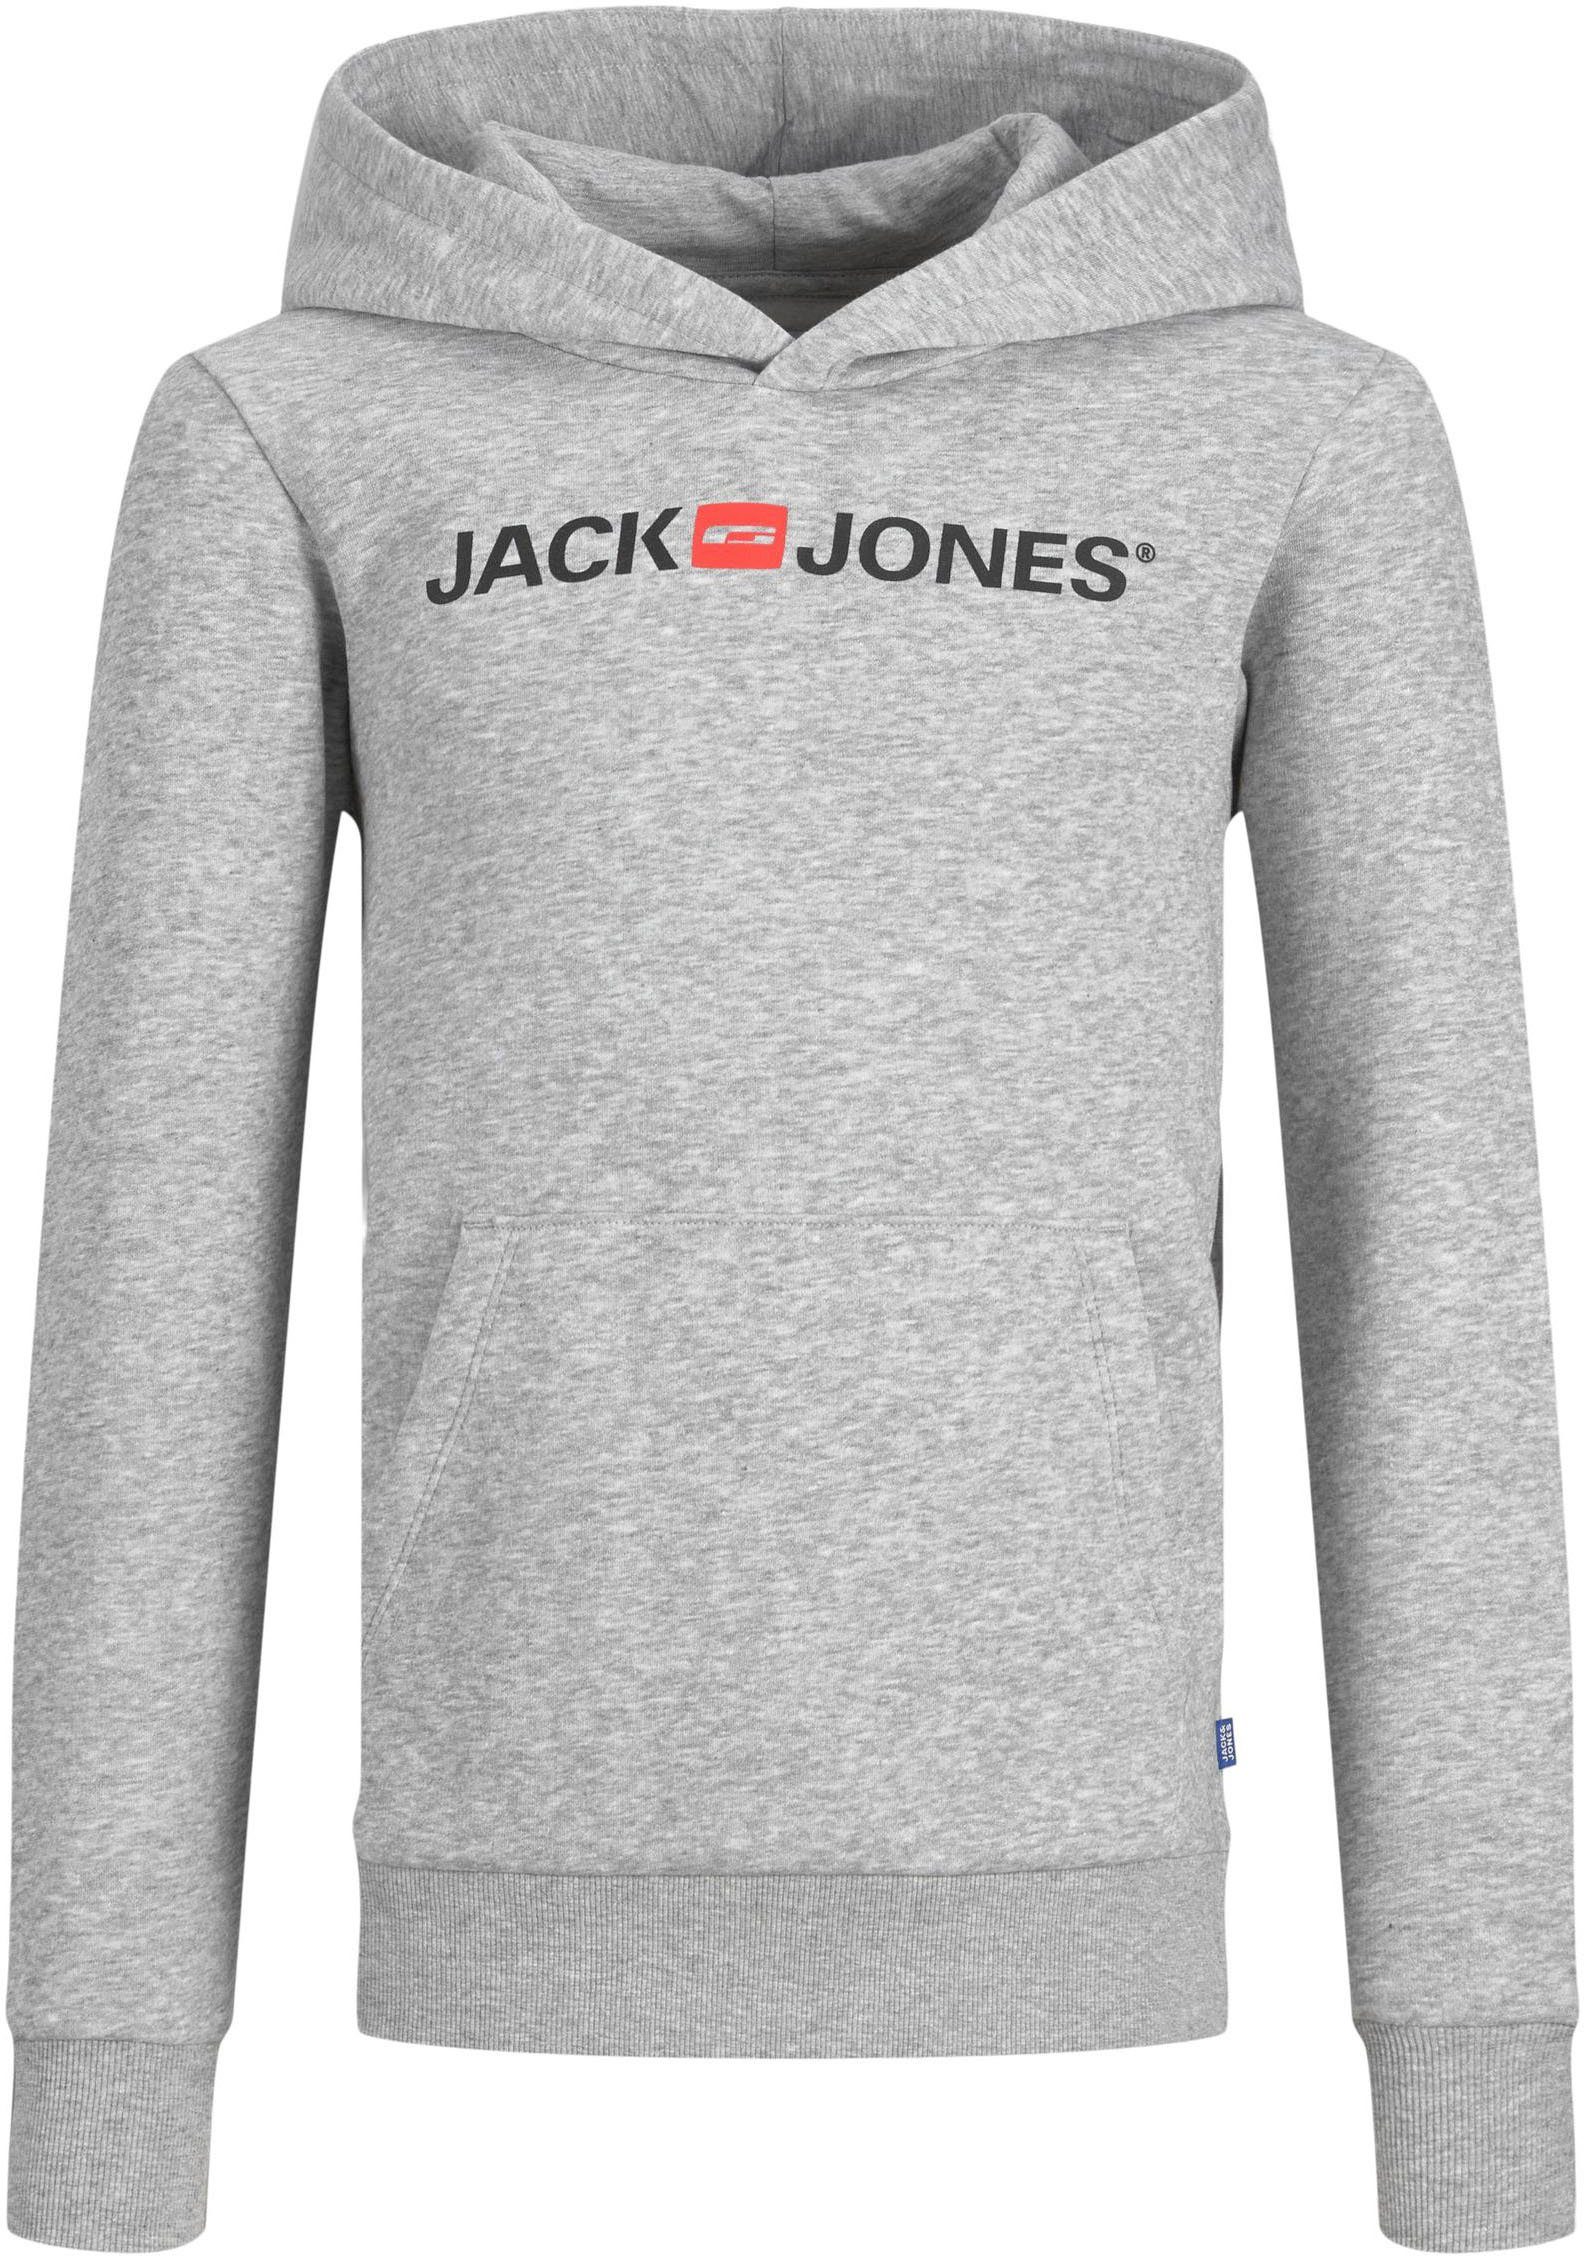 Jones & Jack Junior Kapuzensweatshirt unbekannt